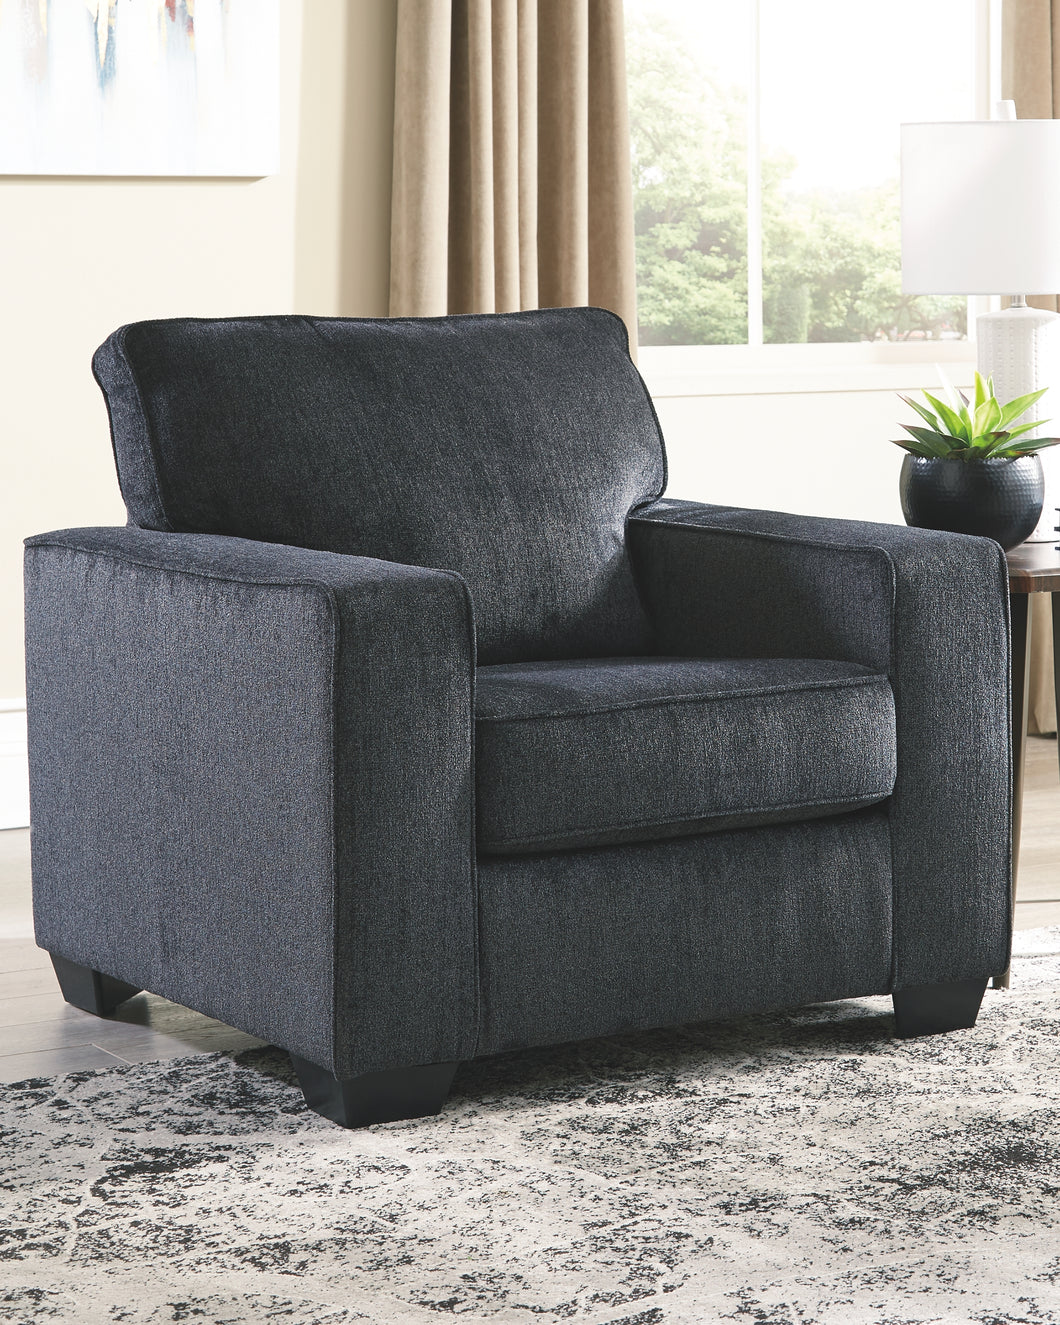 Altari - Chair - 8721320 - Signature Design by Ashley Furniture